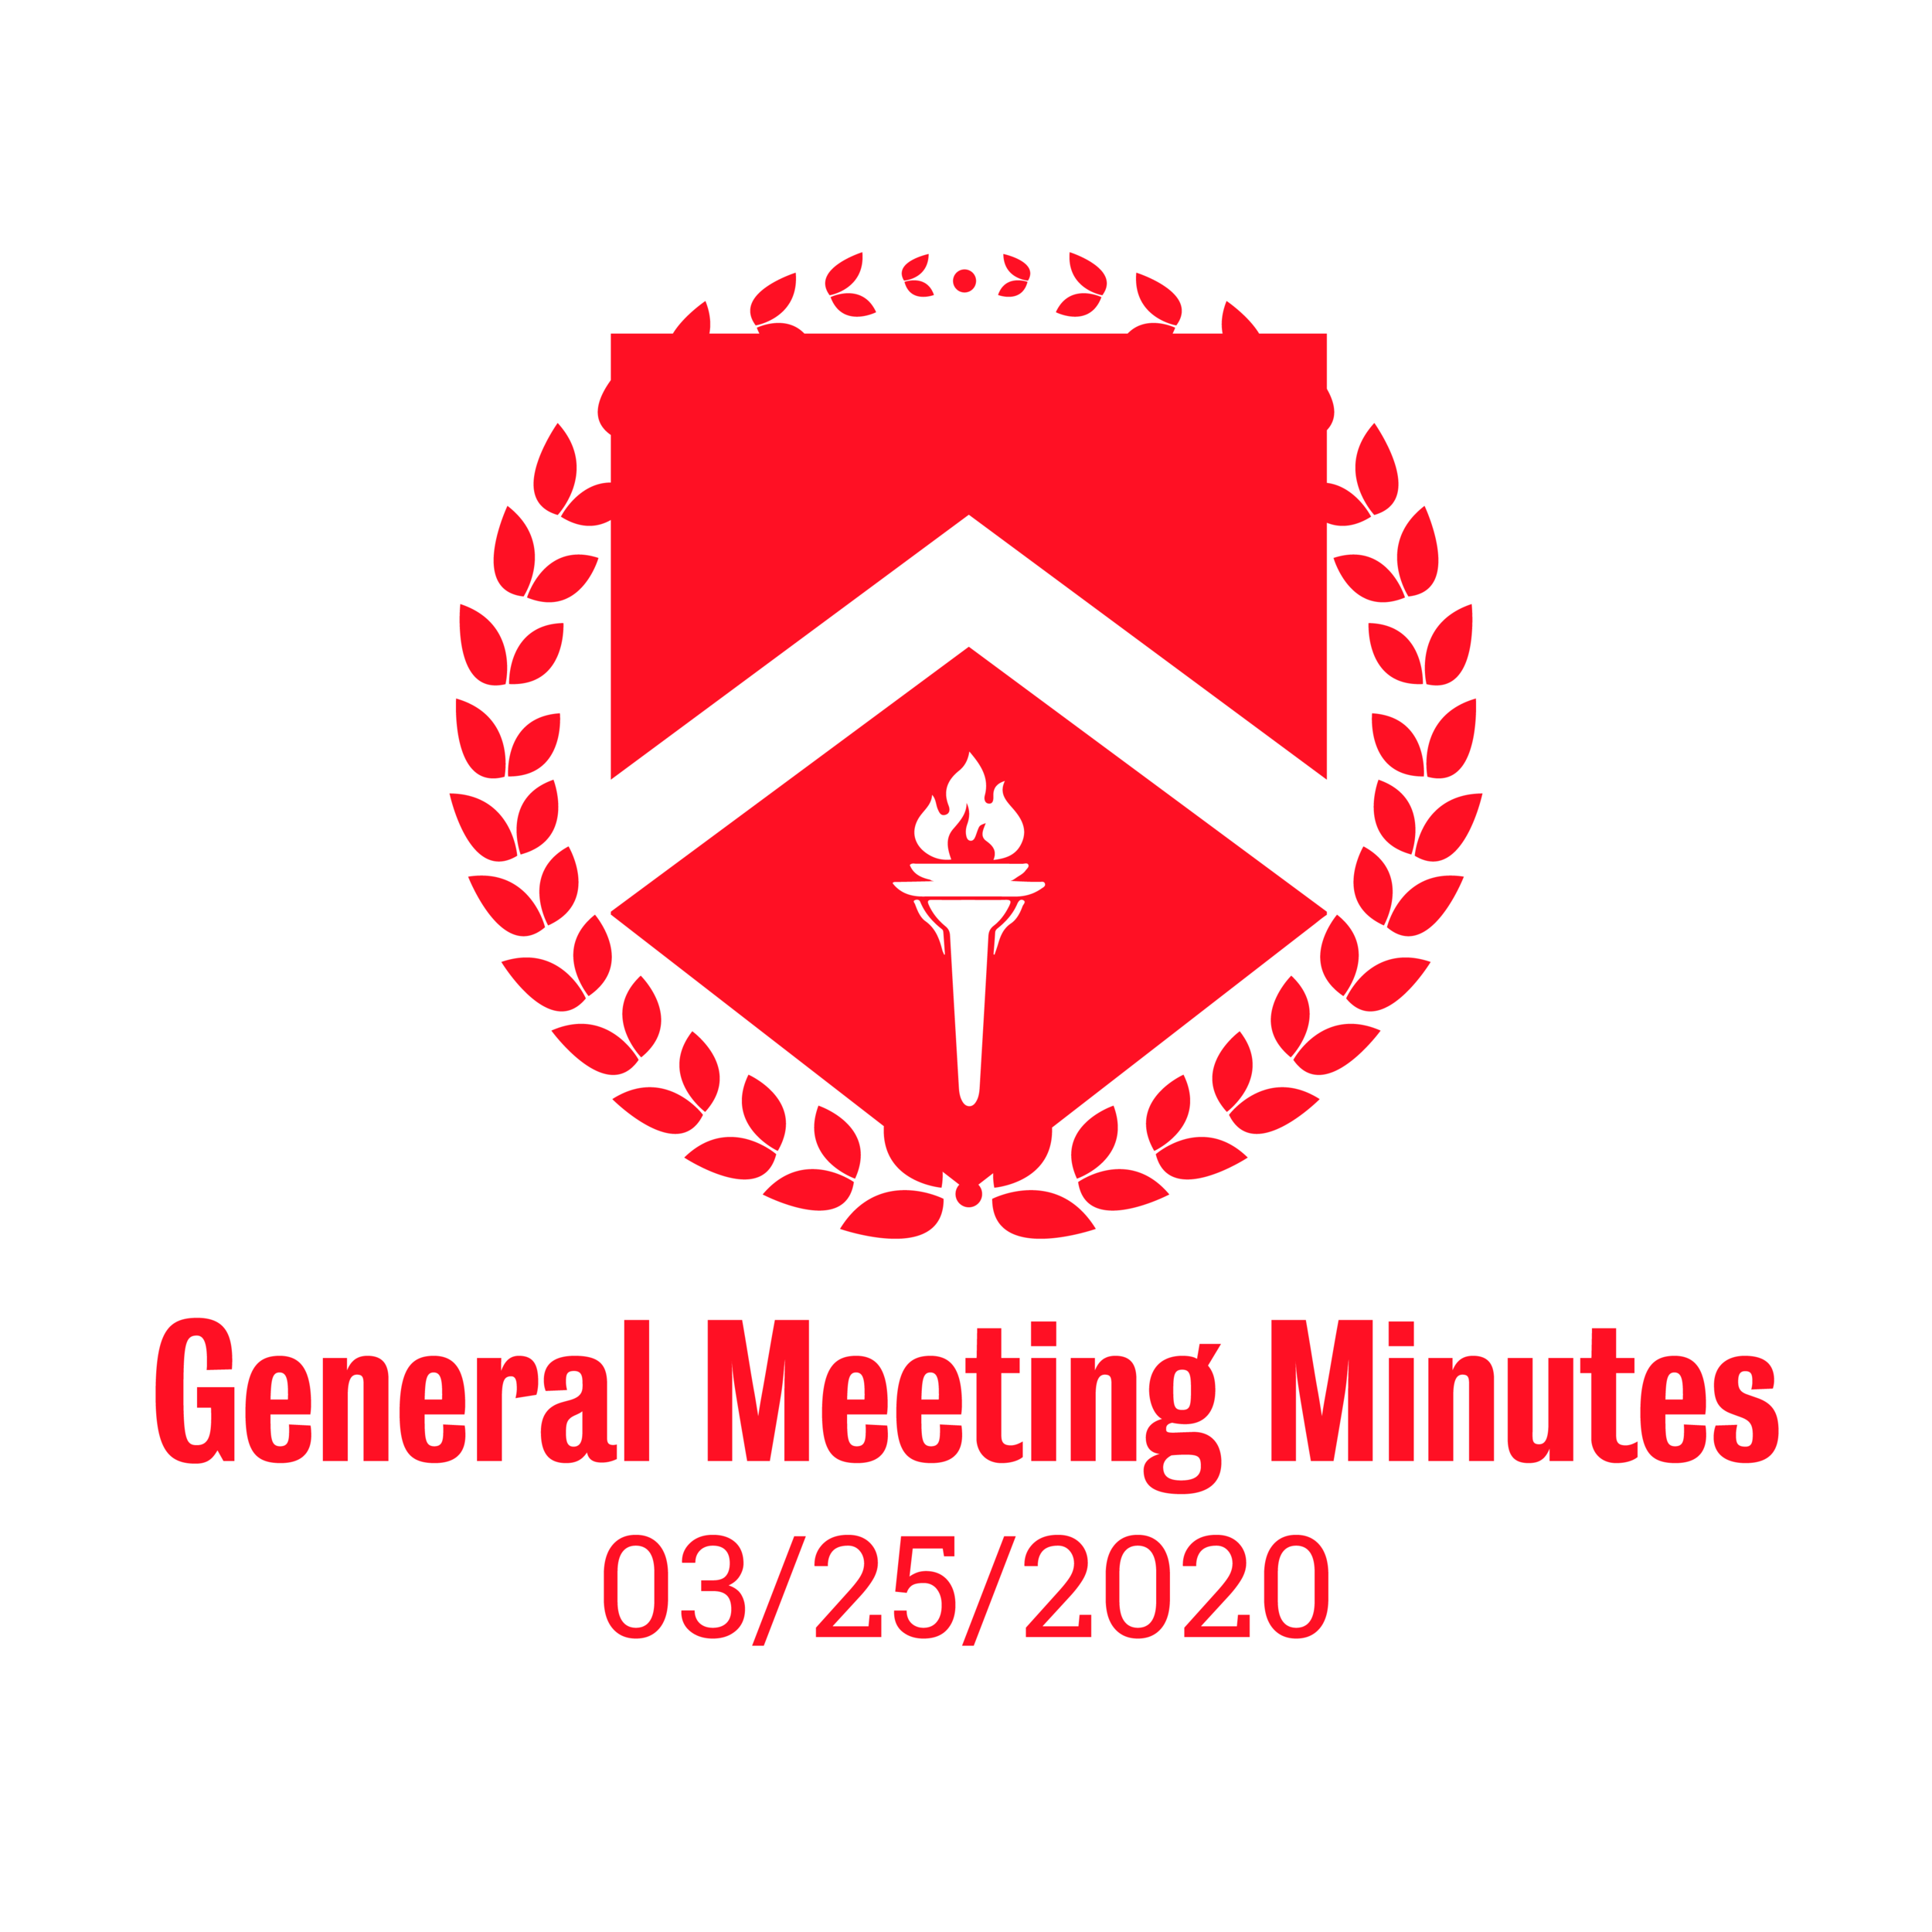 General Meeting Minutes 03/25/2020